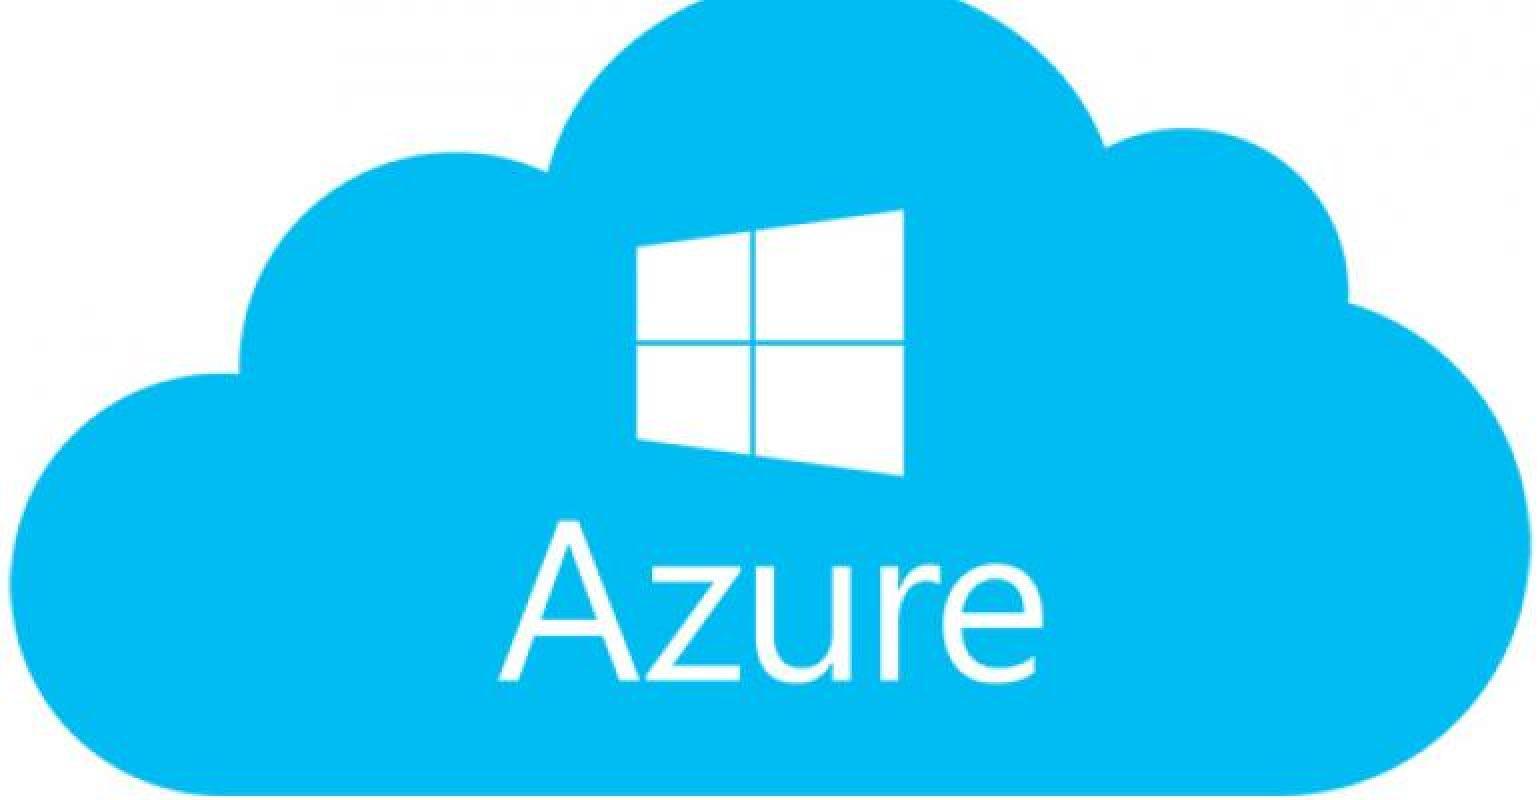 Microsoft Azure training for Beginners in Columbia, SC | Microsoft Azure Fundamentals | Azure cloud computing training | Microsoft Azure Fundamentals AZ-900 Certification Exam Prep (Preparation) Training Course